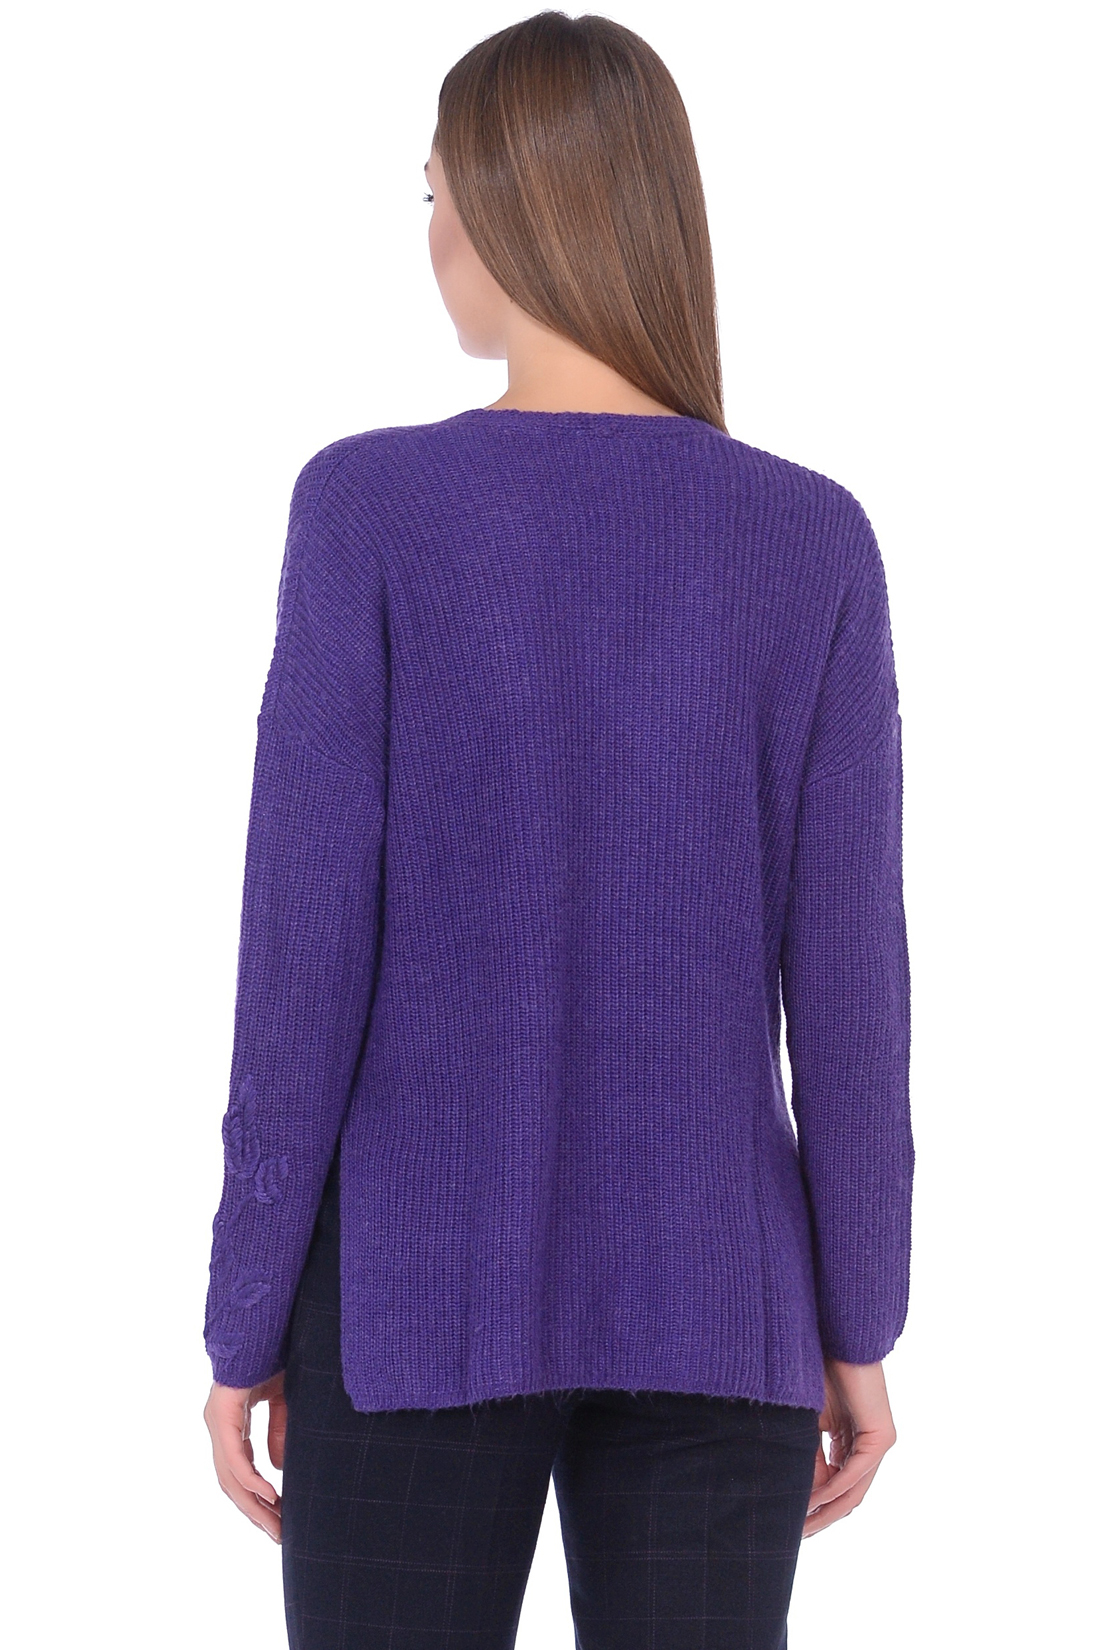 Пуловер с узорами на рукавах (арт. baon B138587), размер L, цвет фиолетовый Пуловер с узорами на рукавах (арт. baon B138587) - фото 2